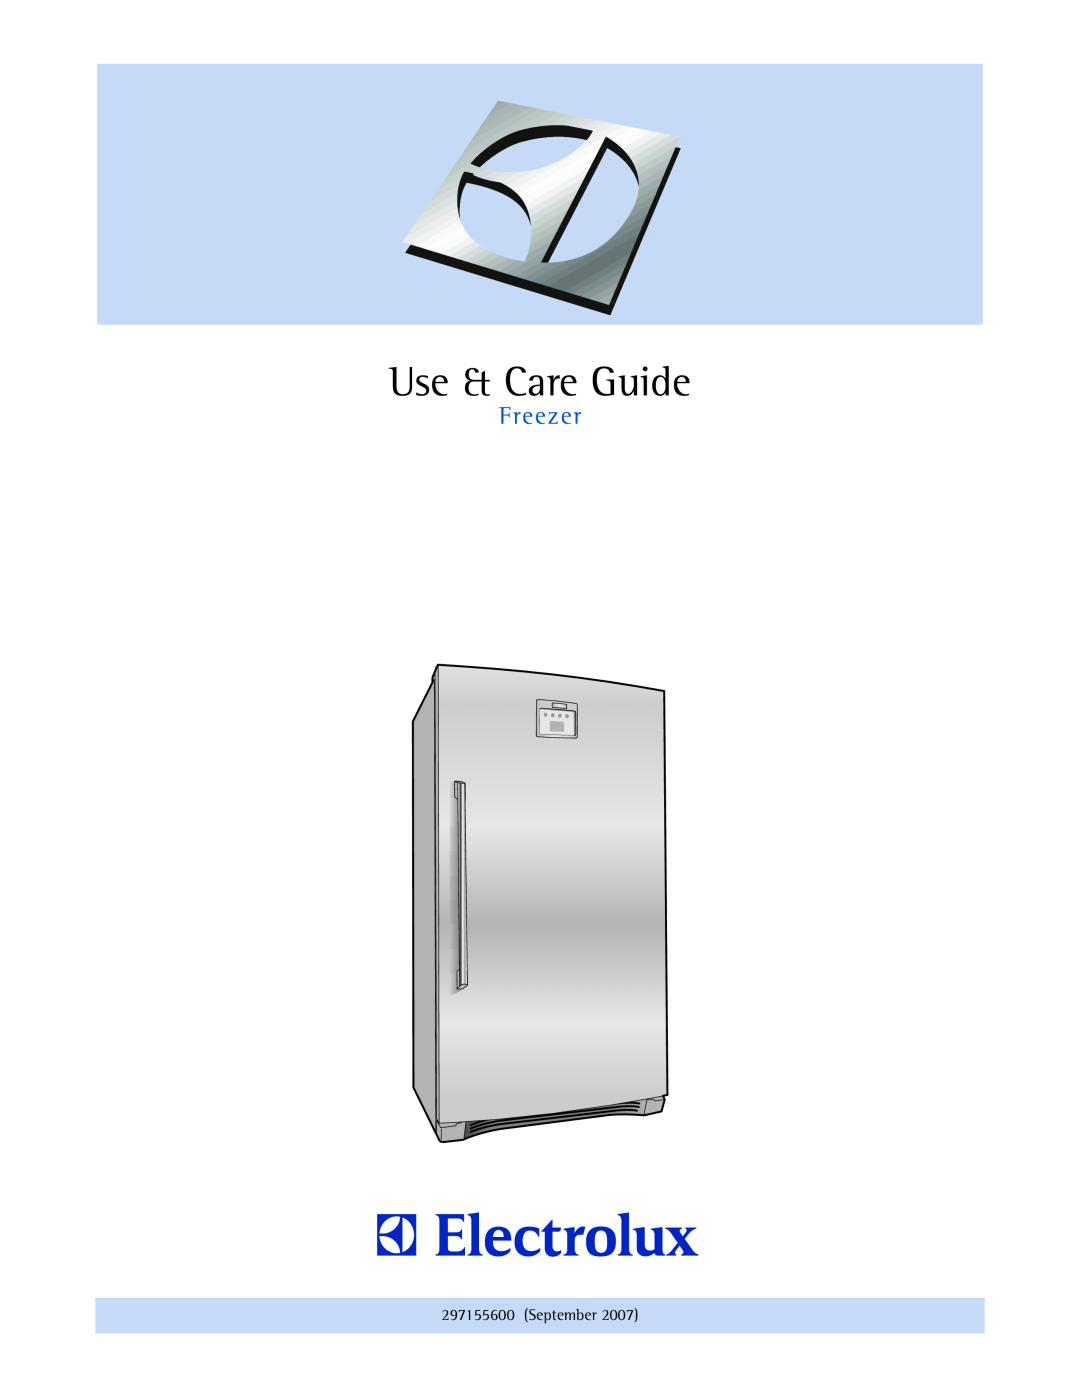 Electrolux EILFU21GS manual Use & Care Guide, Freezer, September 